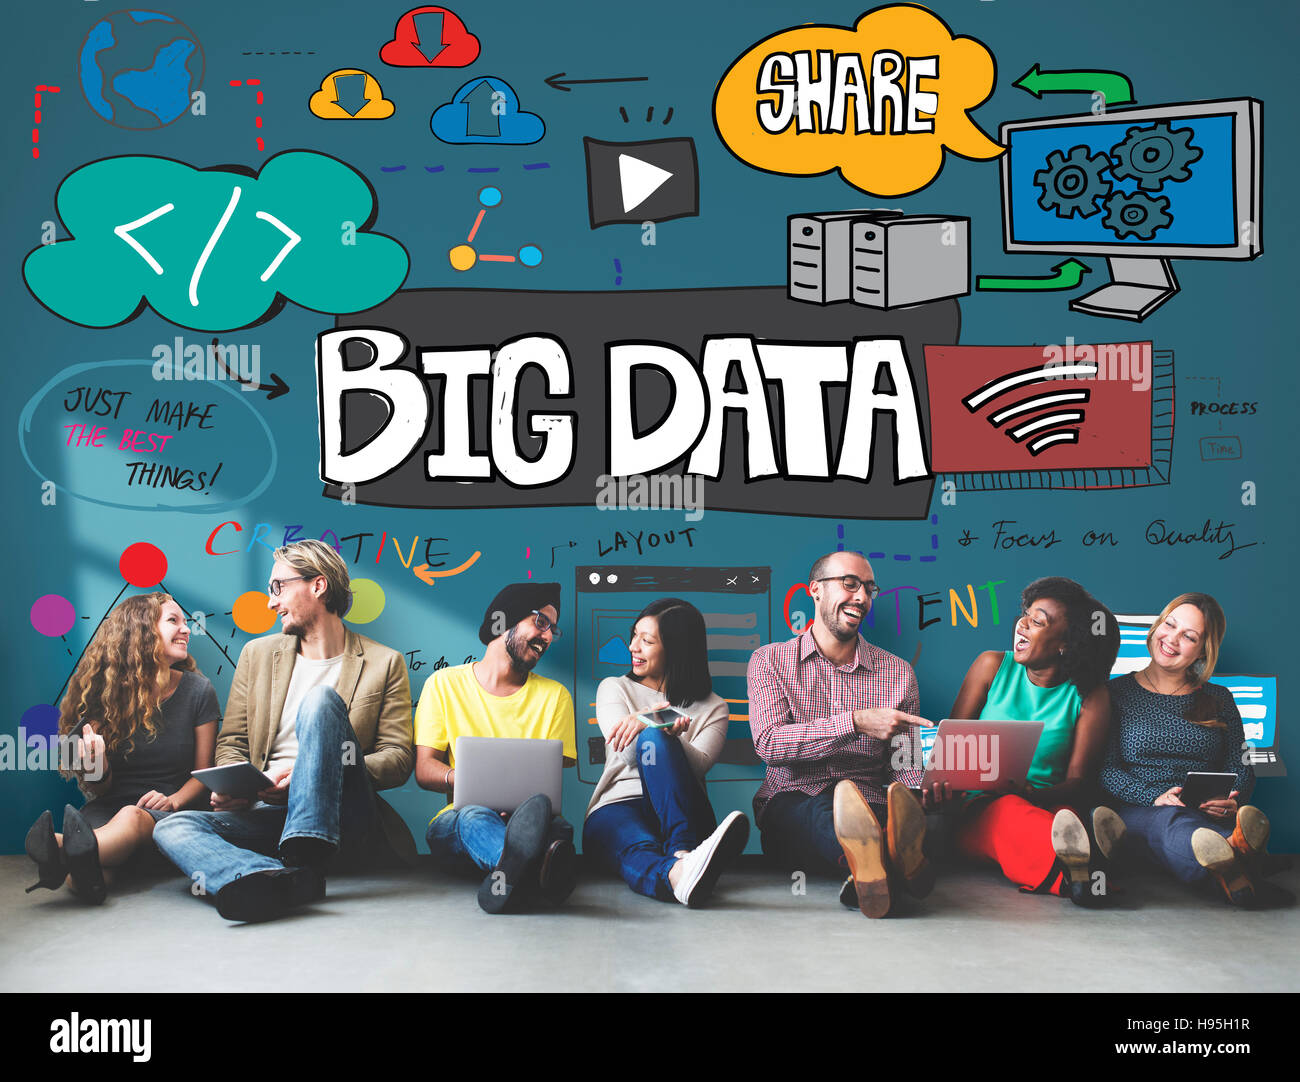 Big Data Online Internet Technology Concept Stock Photo